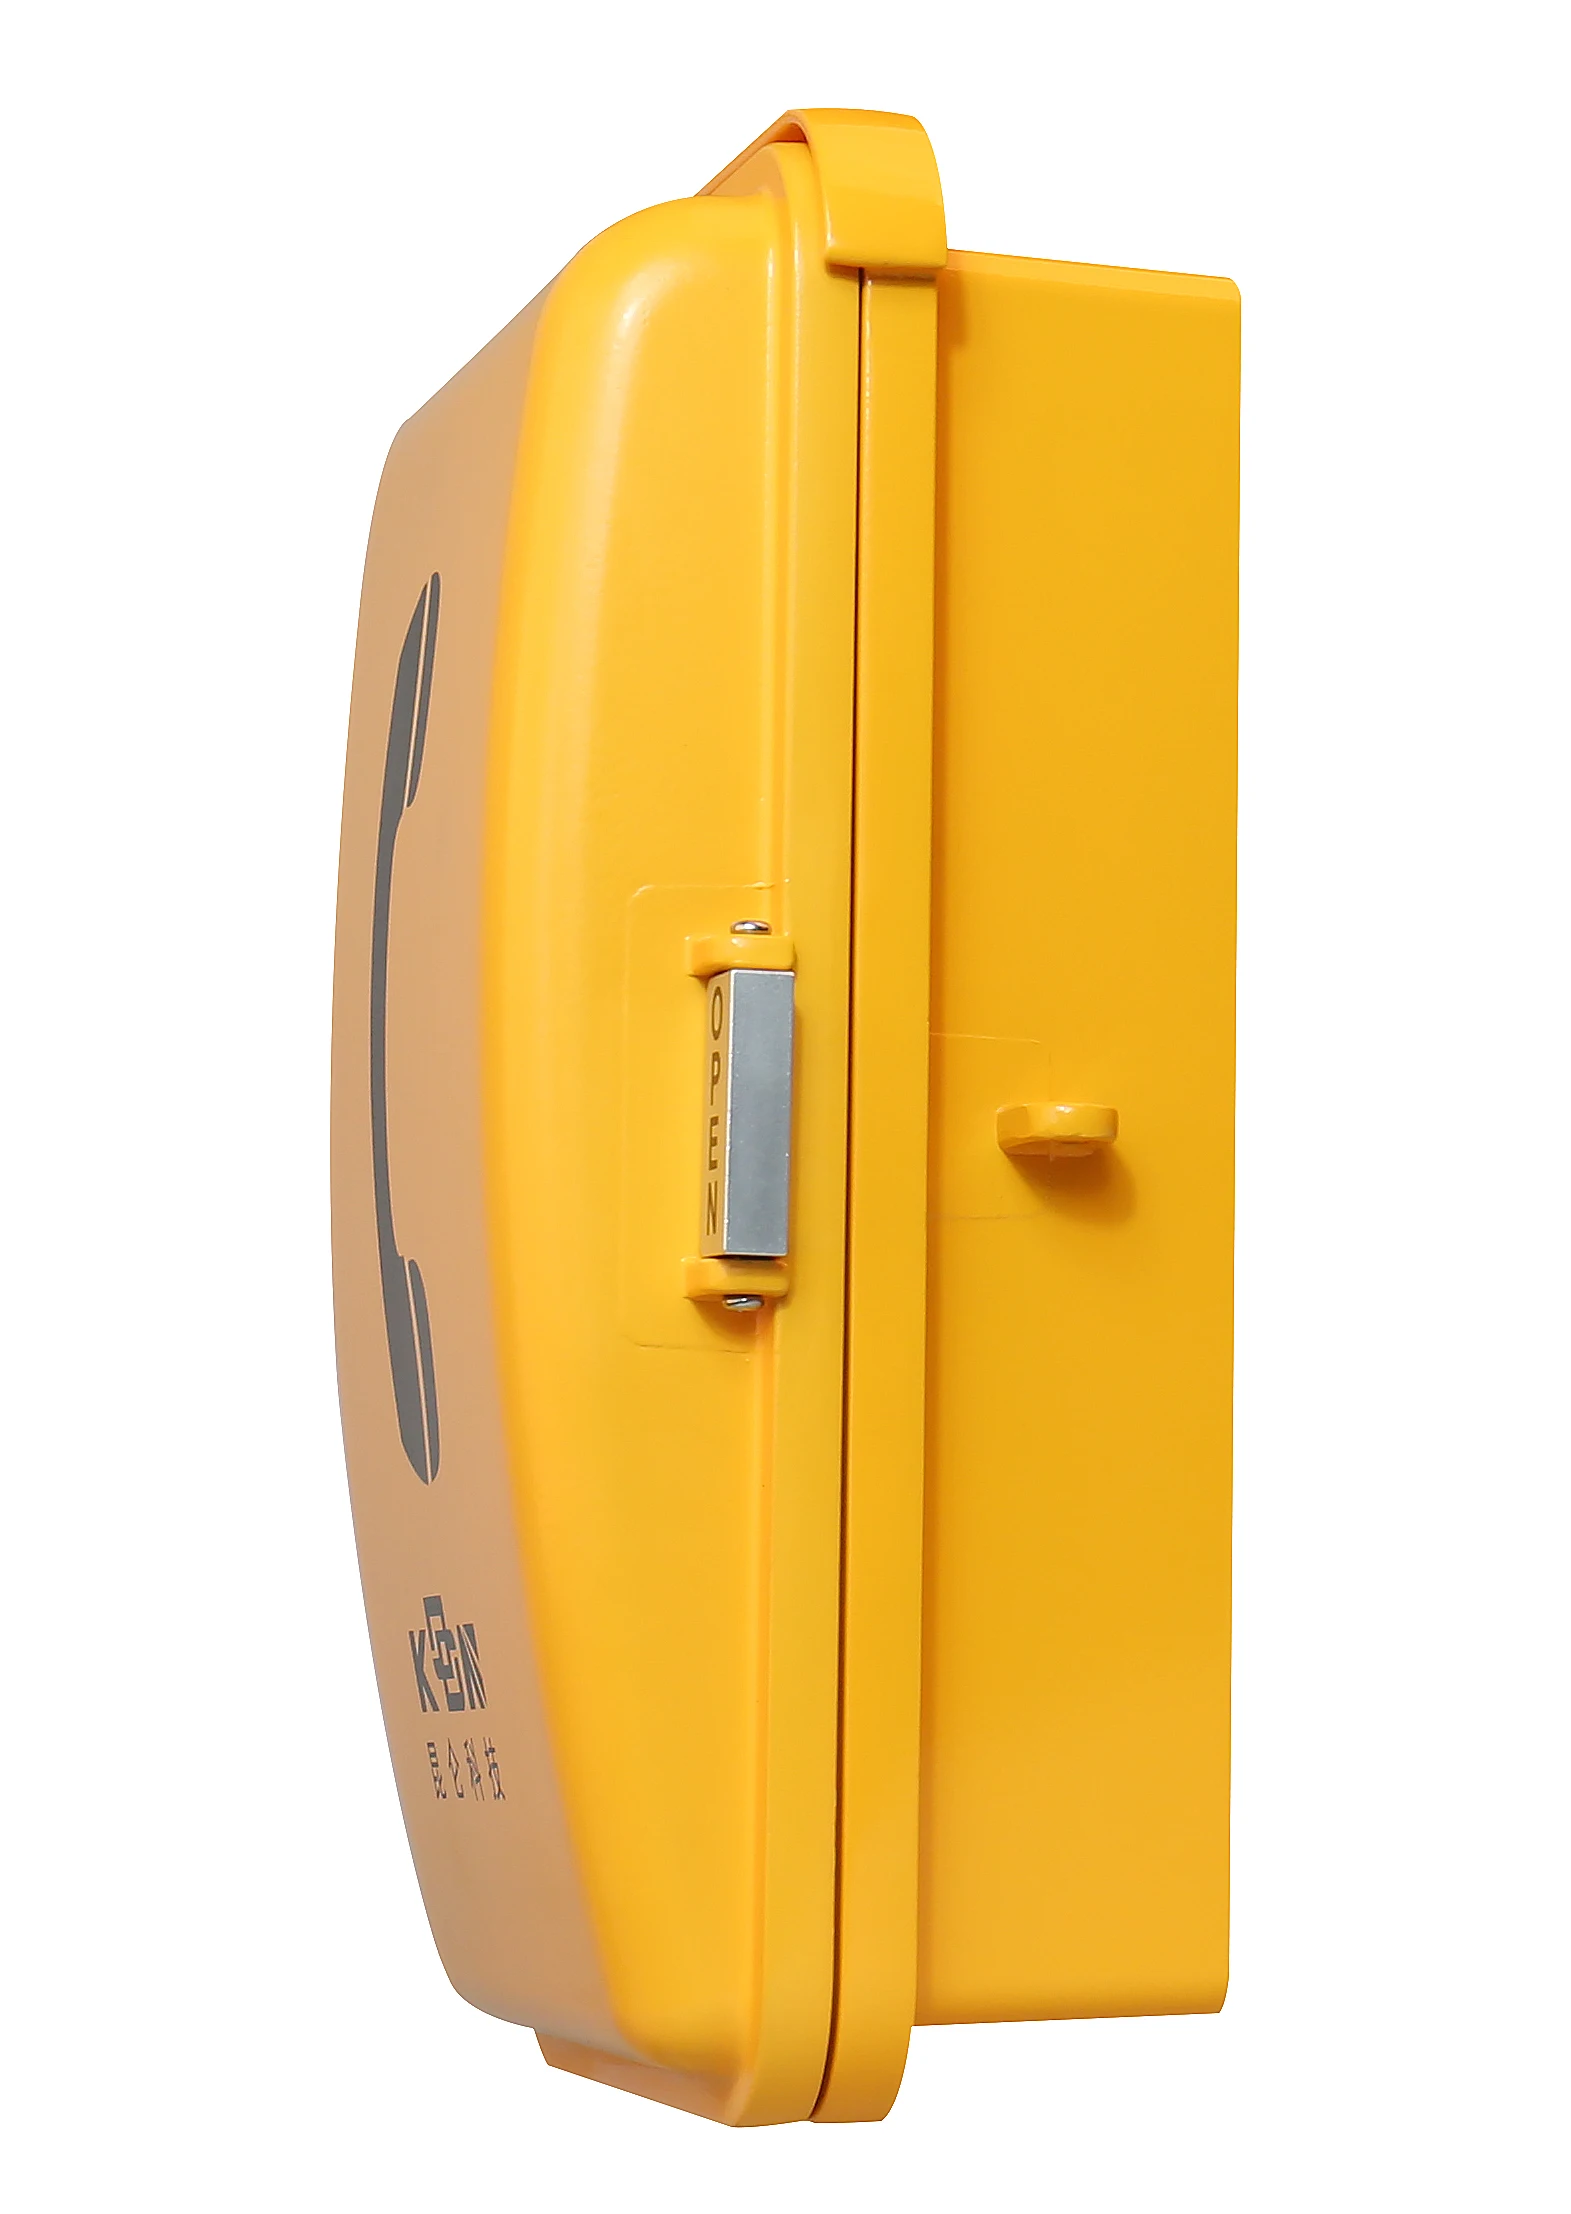 Industrial Waterproof Telephone Box, Emergency Call Box, Outdoor